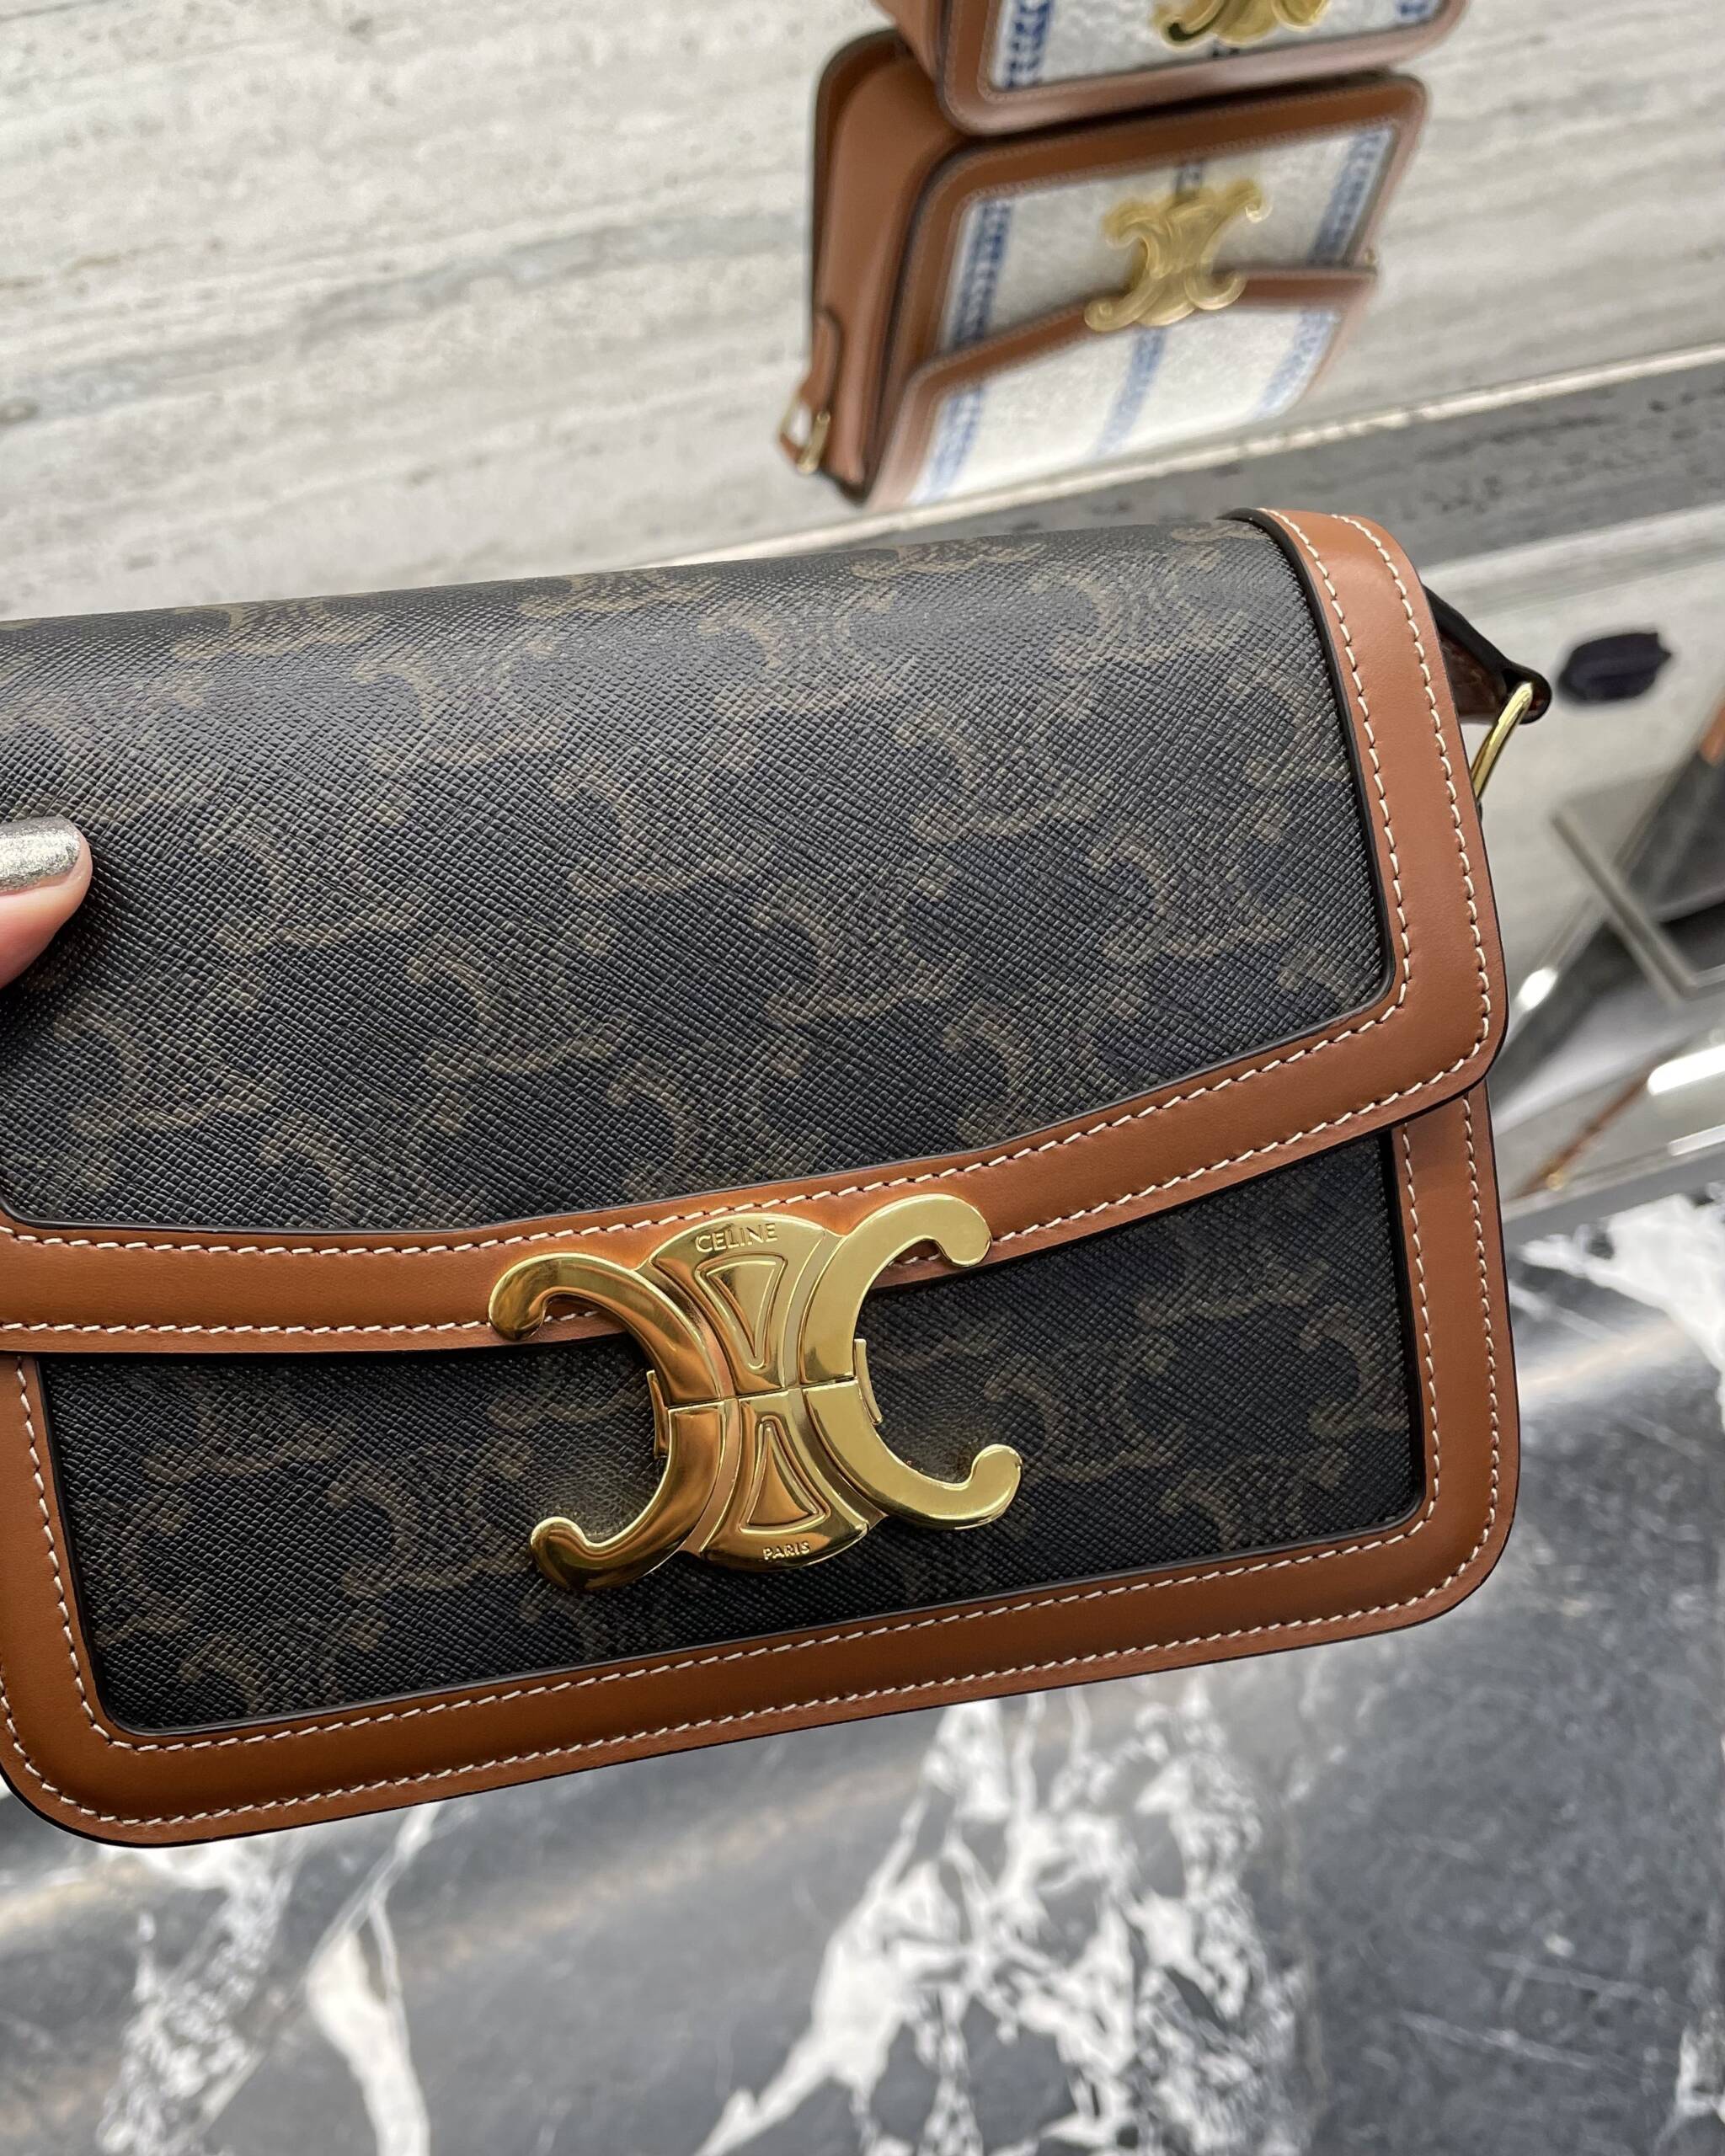 Chanel 22 Small or Celine Teen Triomphe? : r/handbags